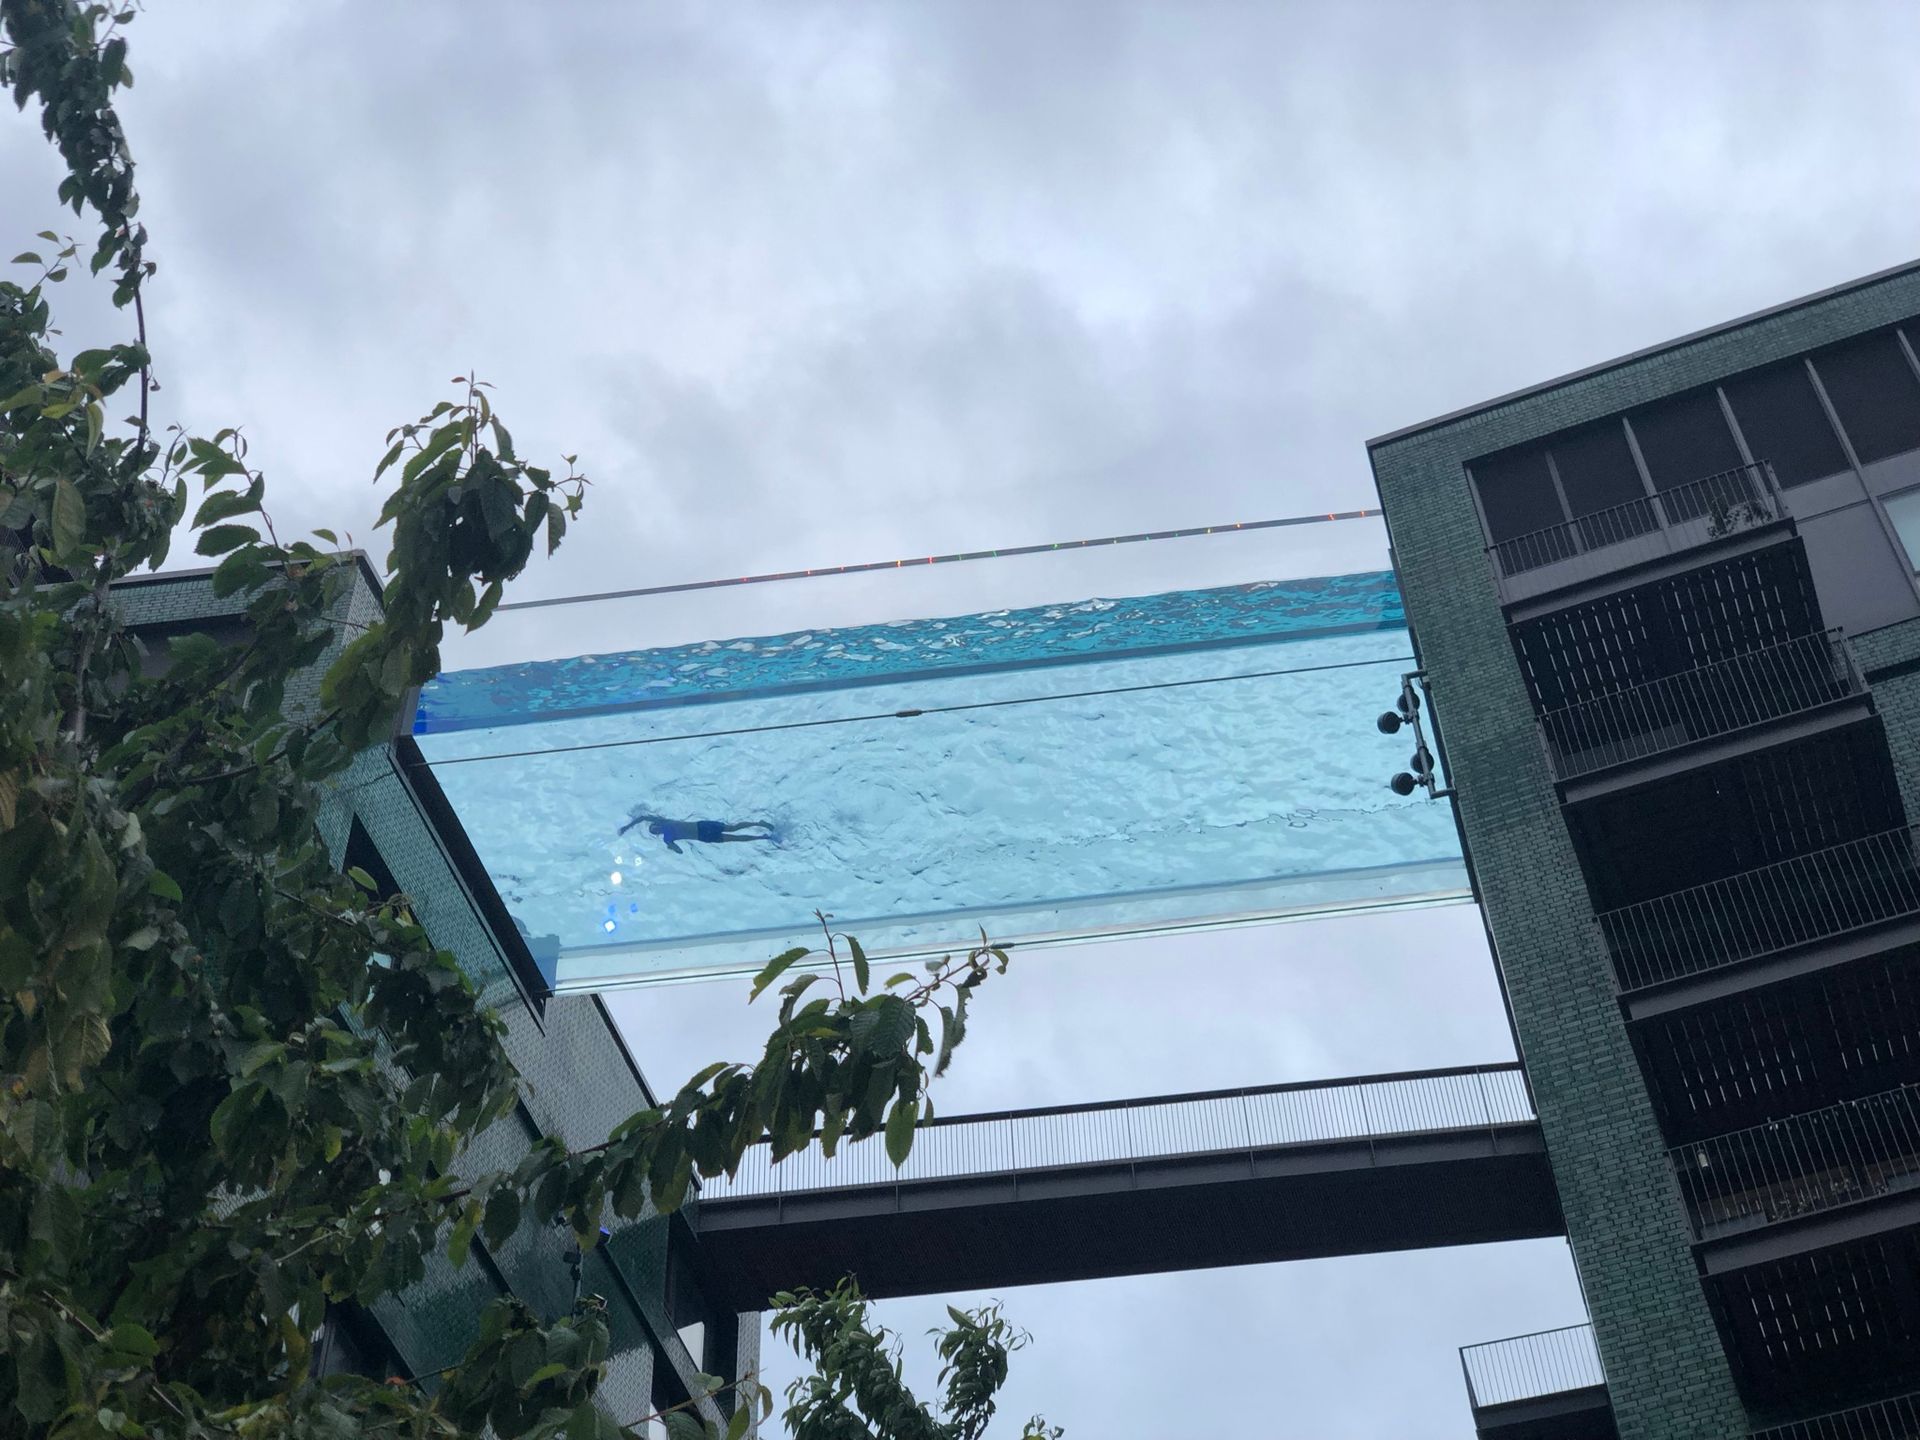 Swimming pool in the sky linking two buildings towerblocks